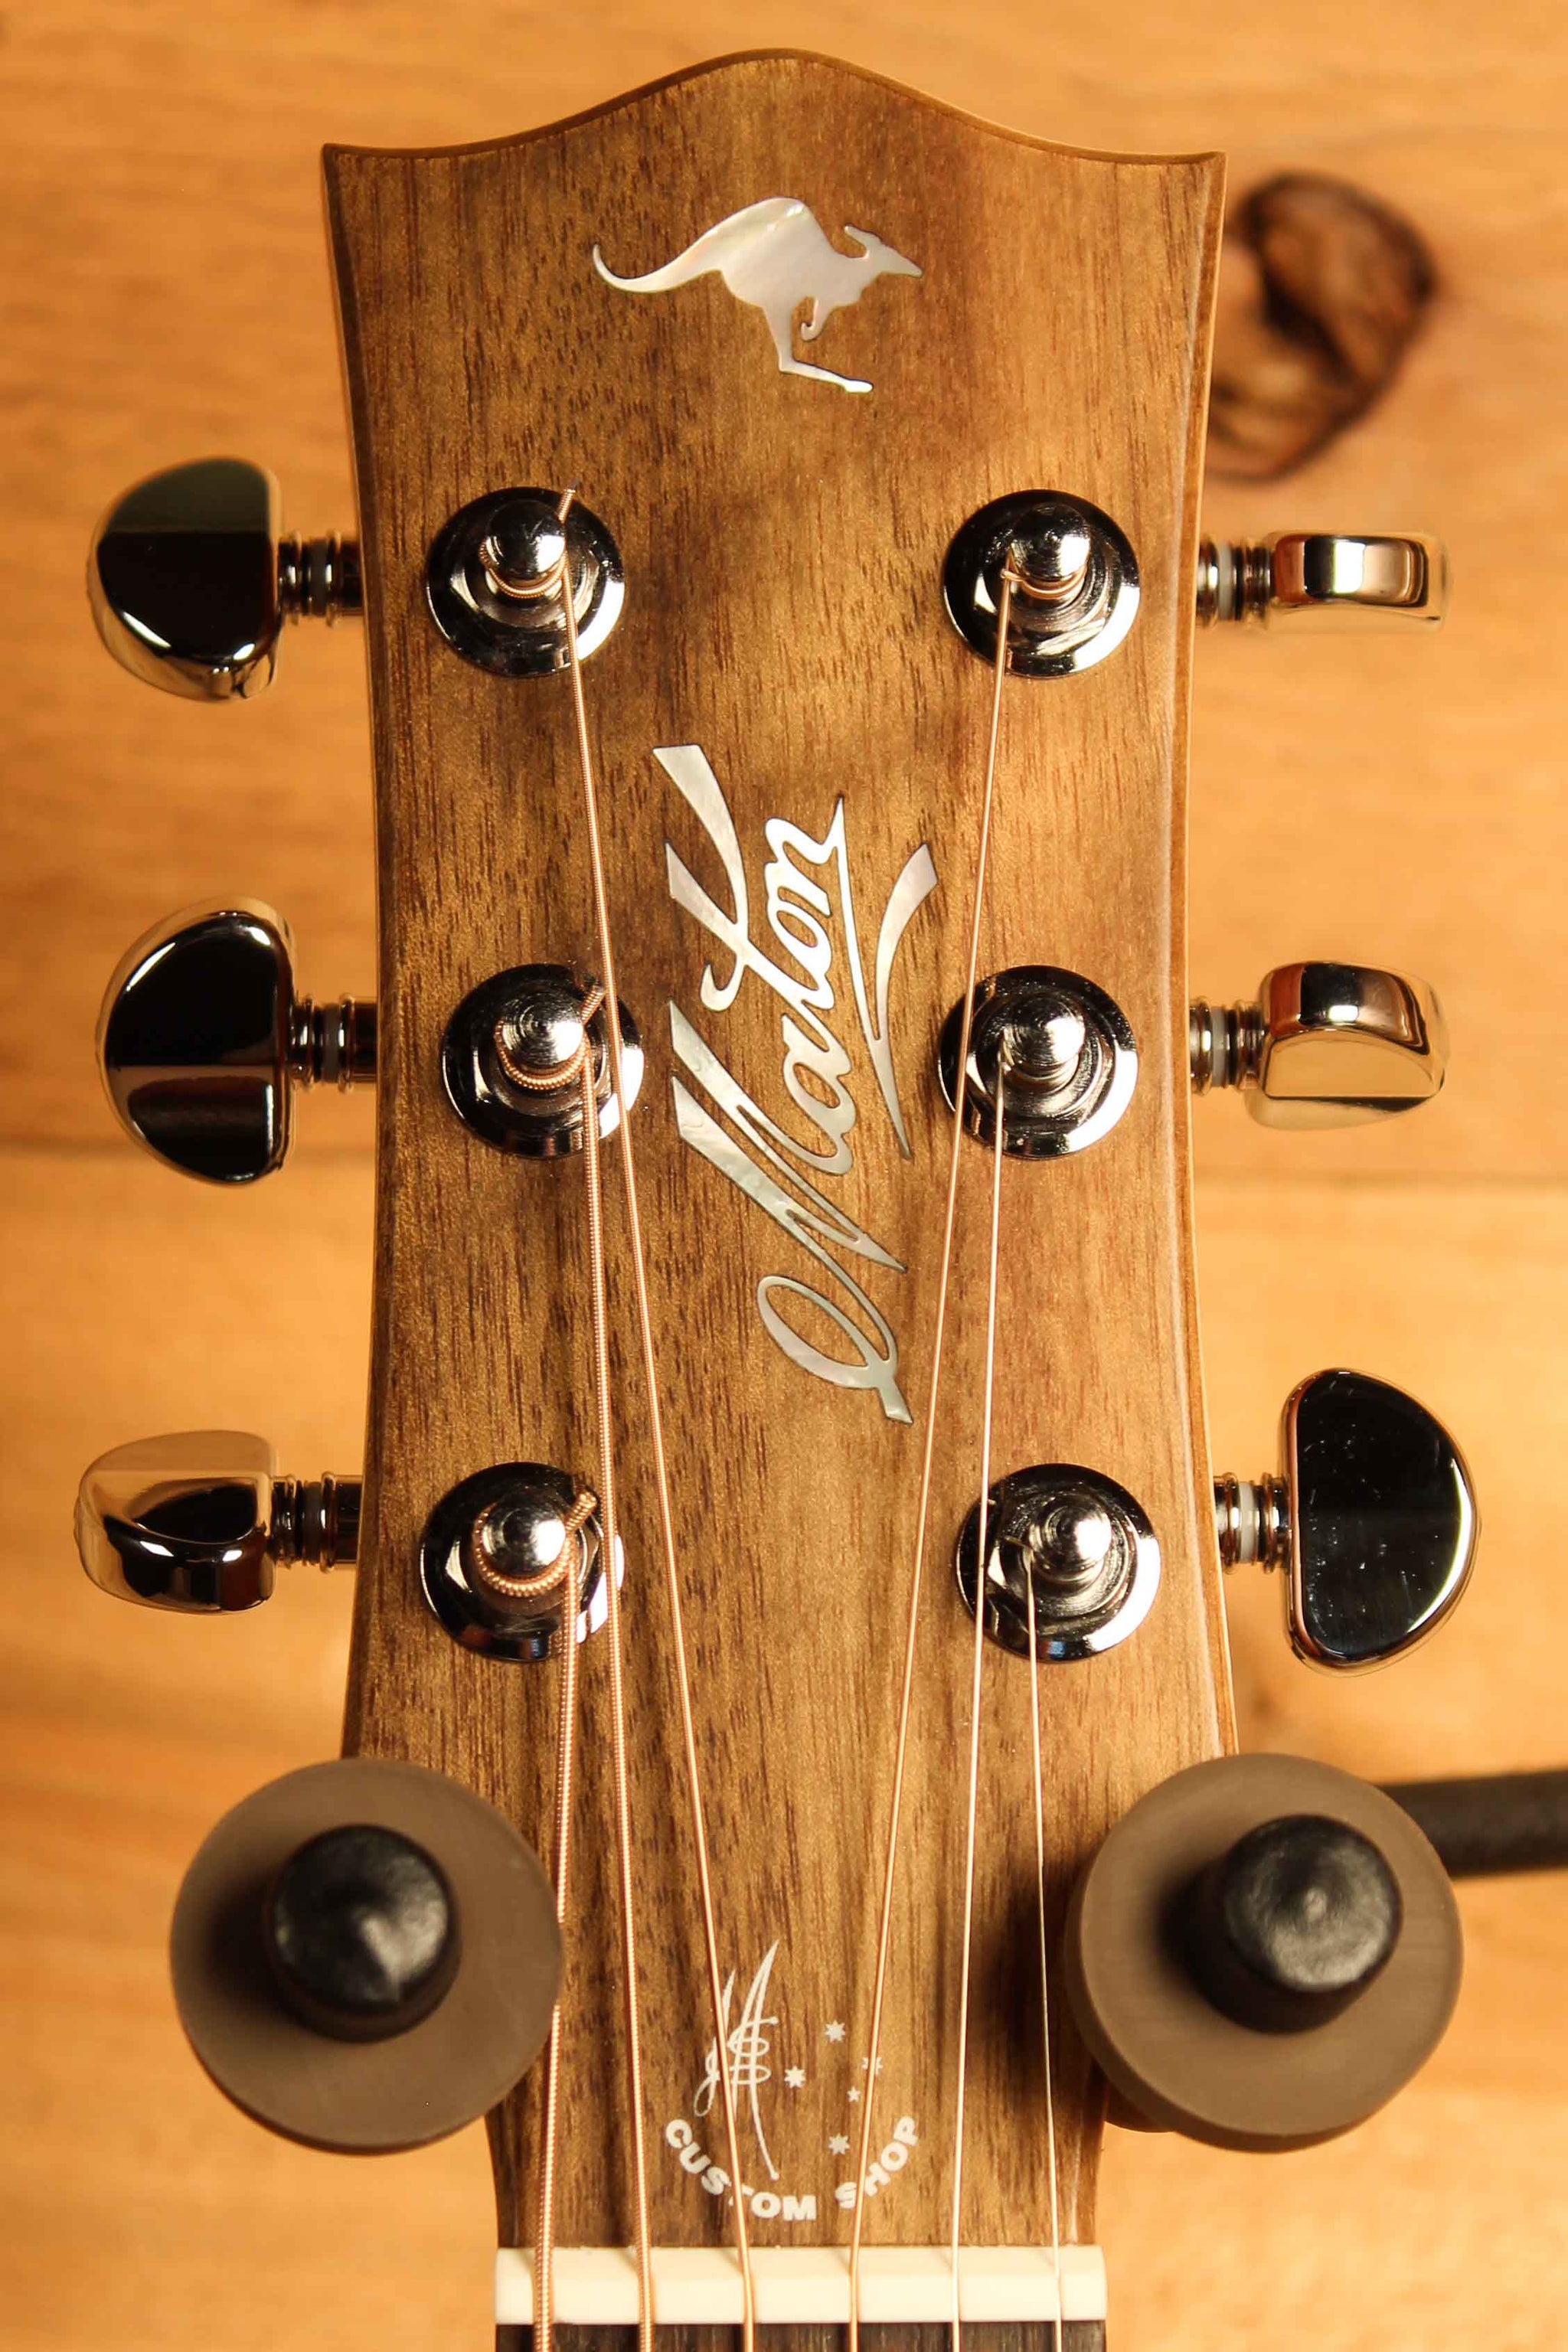 Maton Custom Shop TE Personal Thinline Guitar "AAA" Sitka Spruce and AAA" Figured Queensland Maple ID-13616 - Artisan Guitars